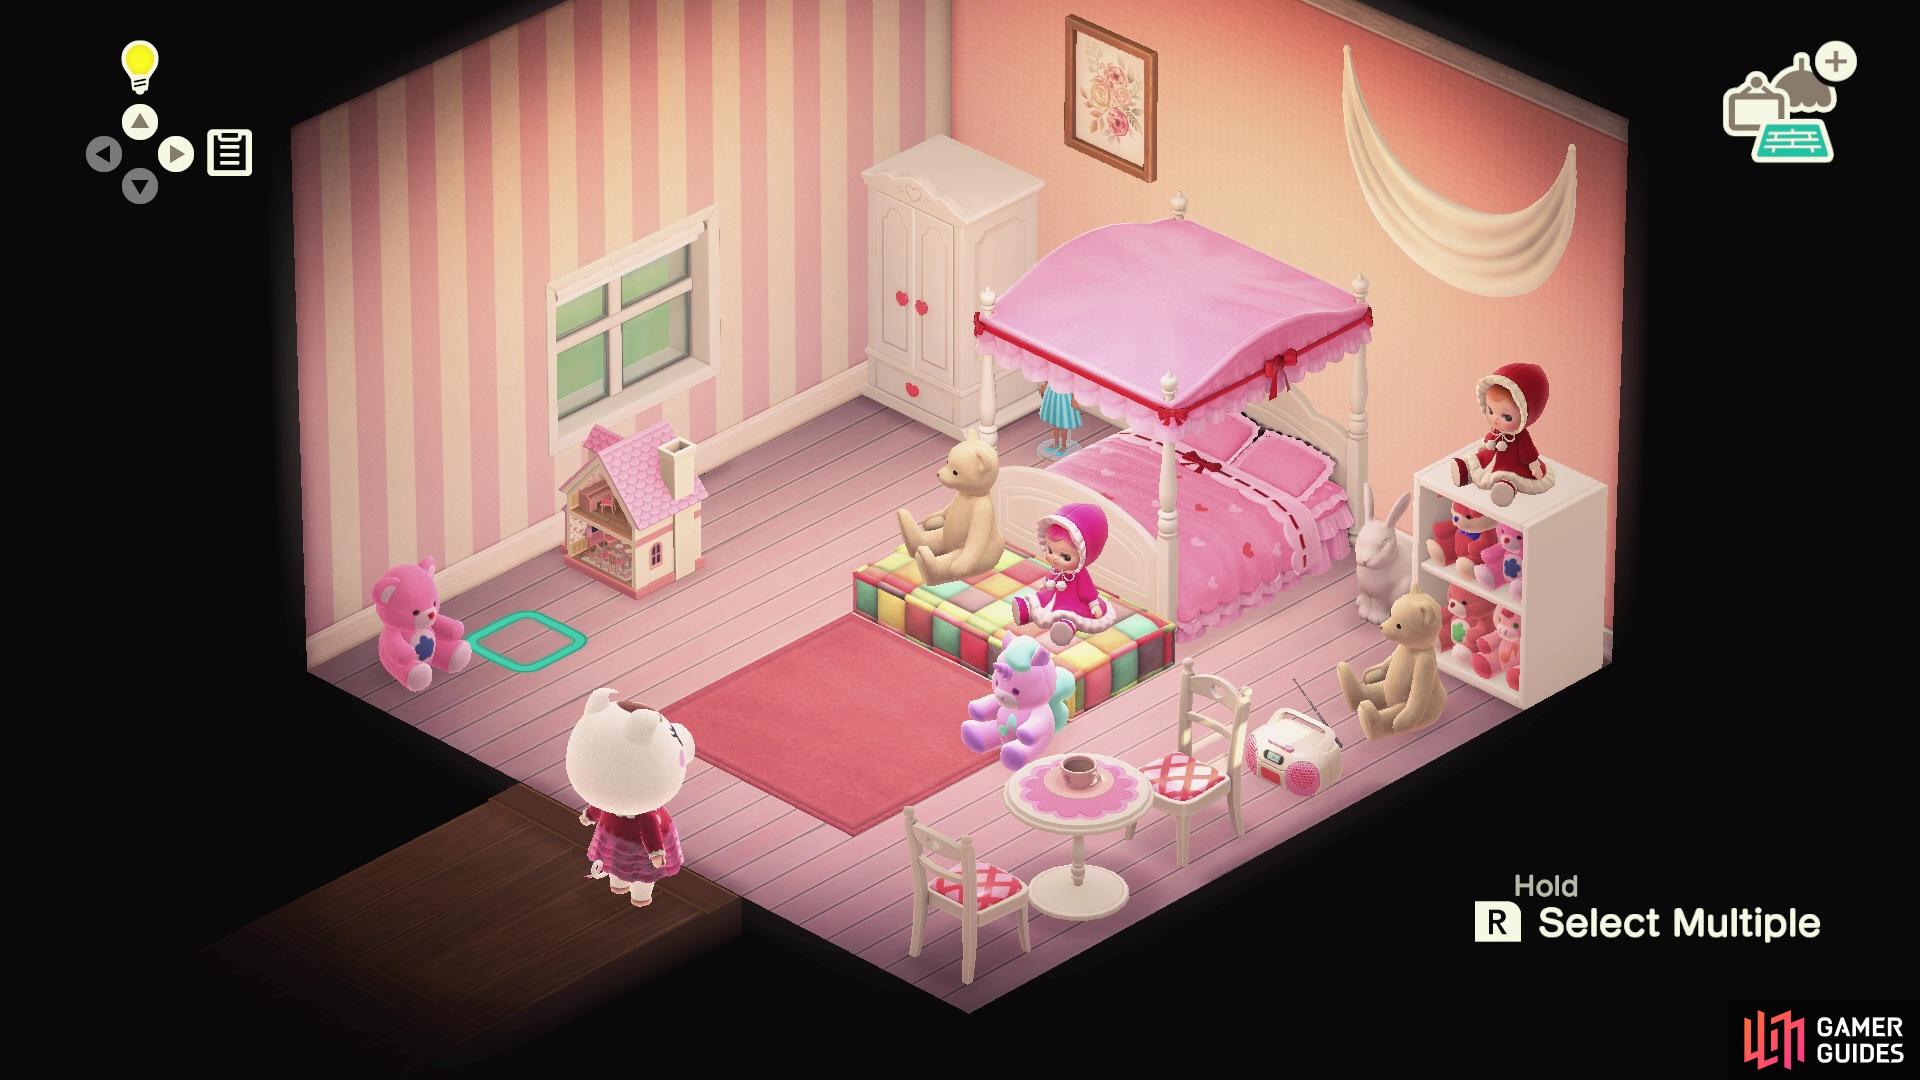 Dollhouse, Animal Crossing Wiki